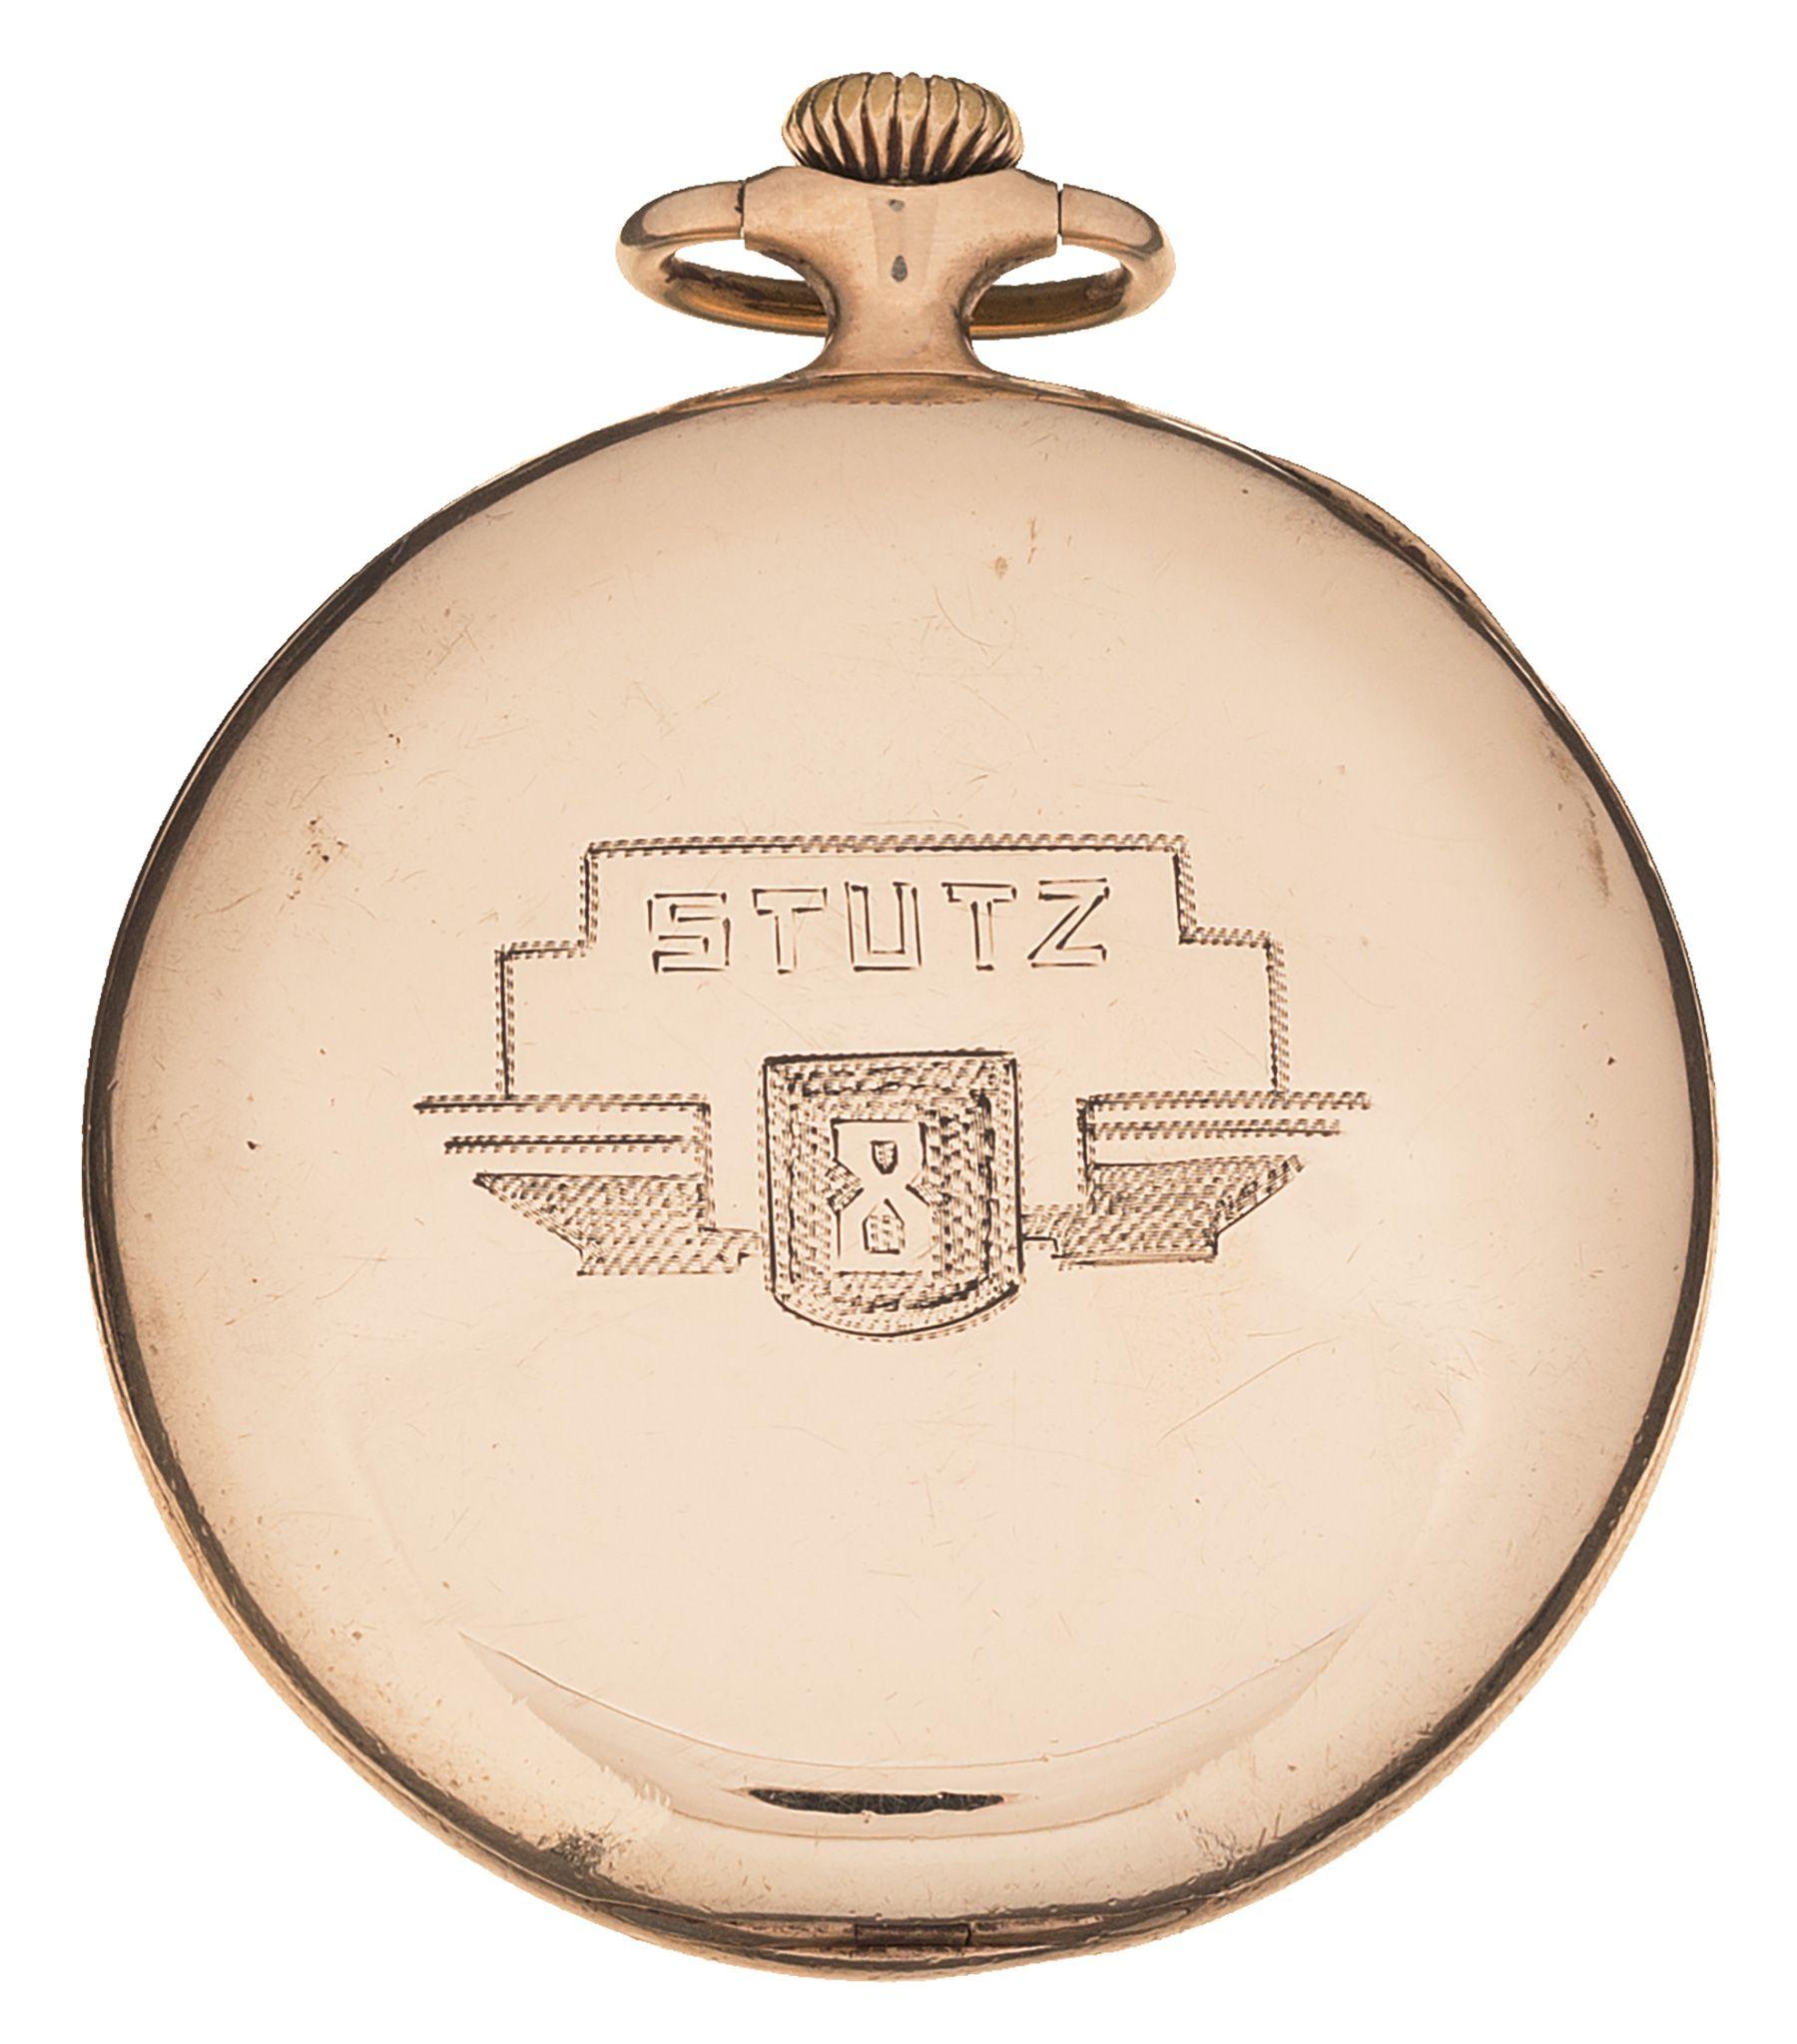 Elgin Watch Company Chronograph Pocket Watch